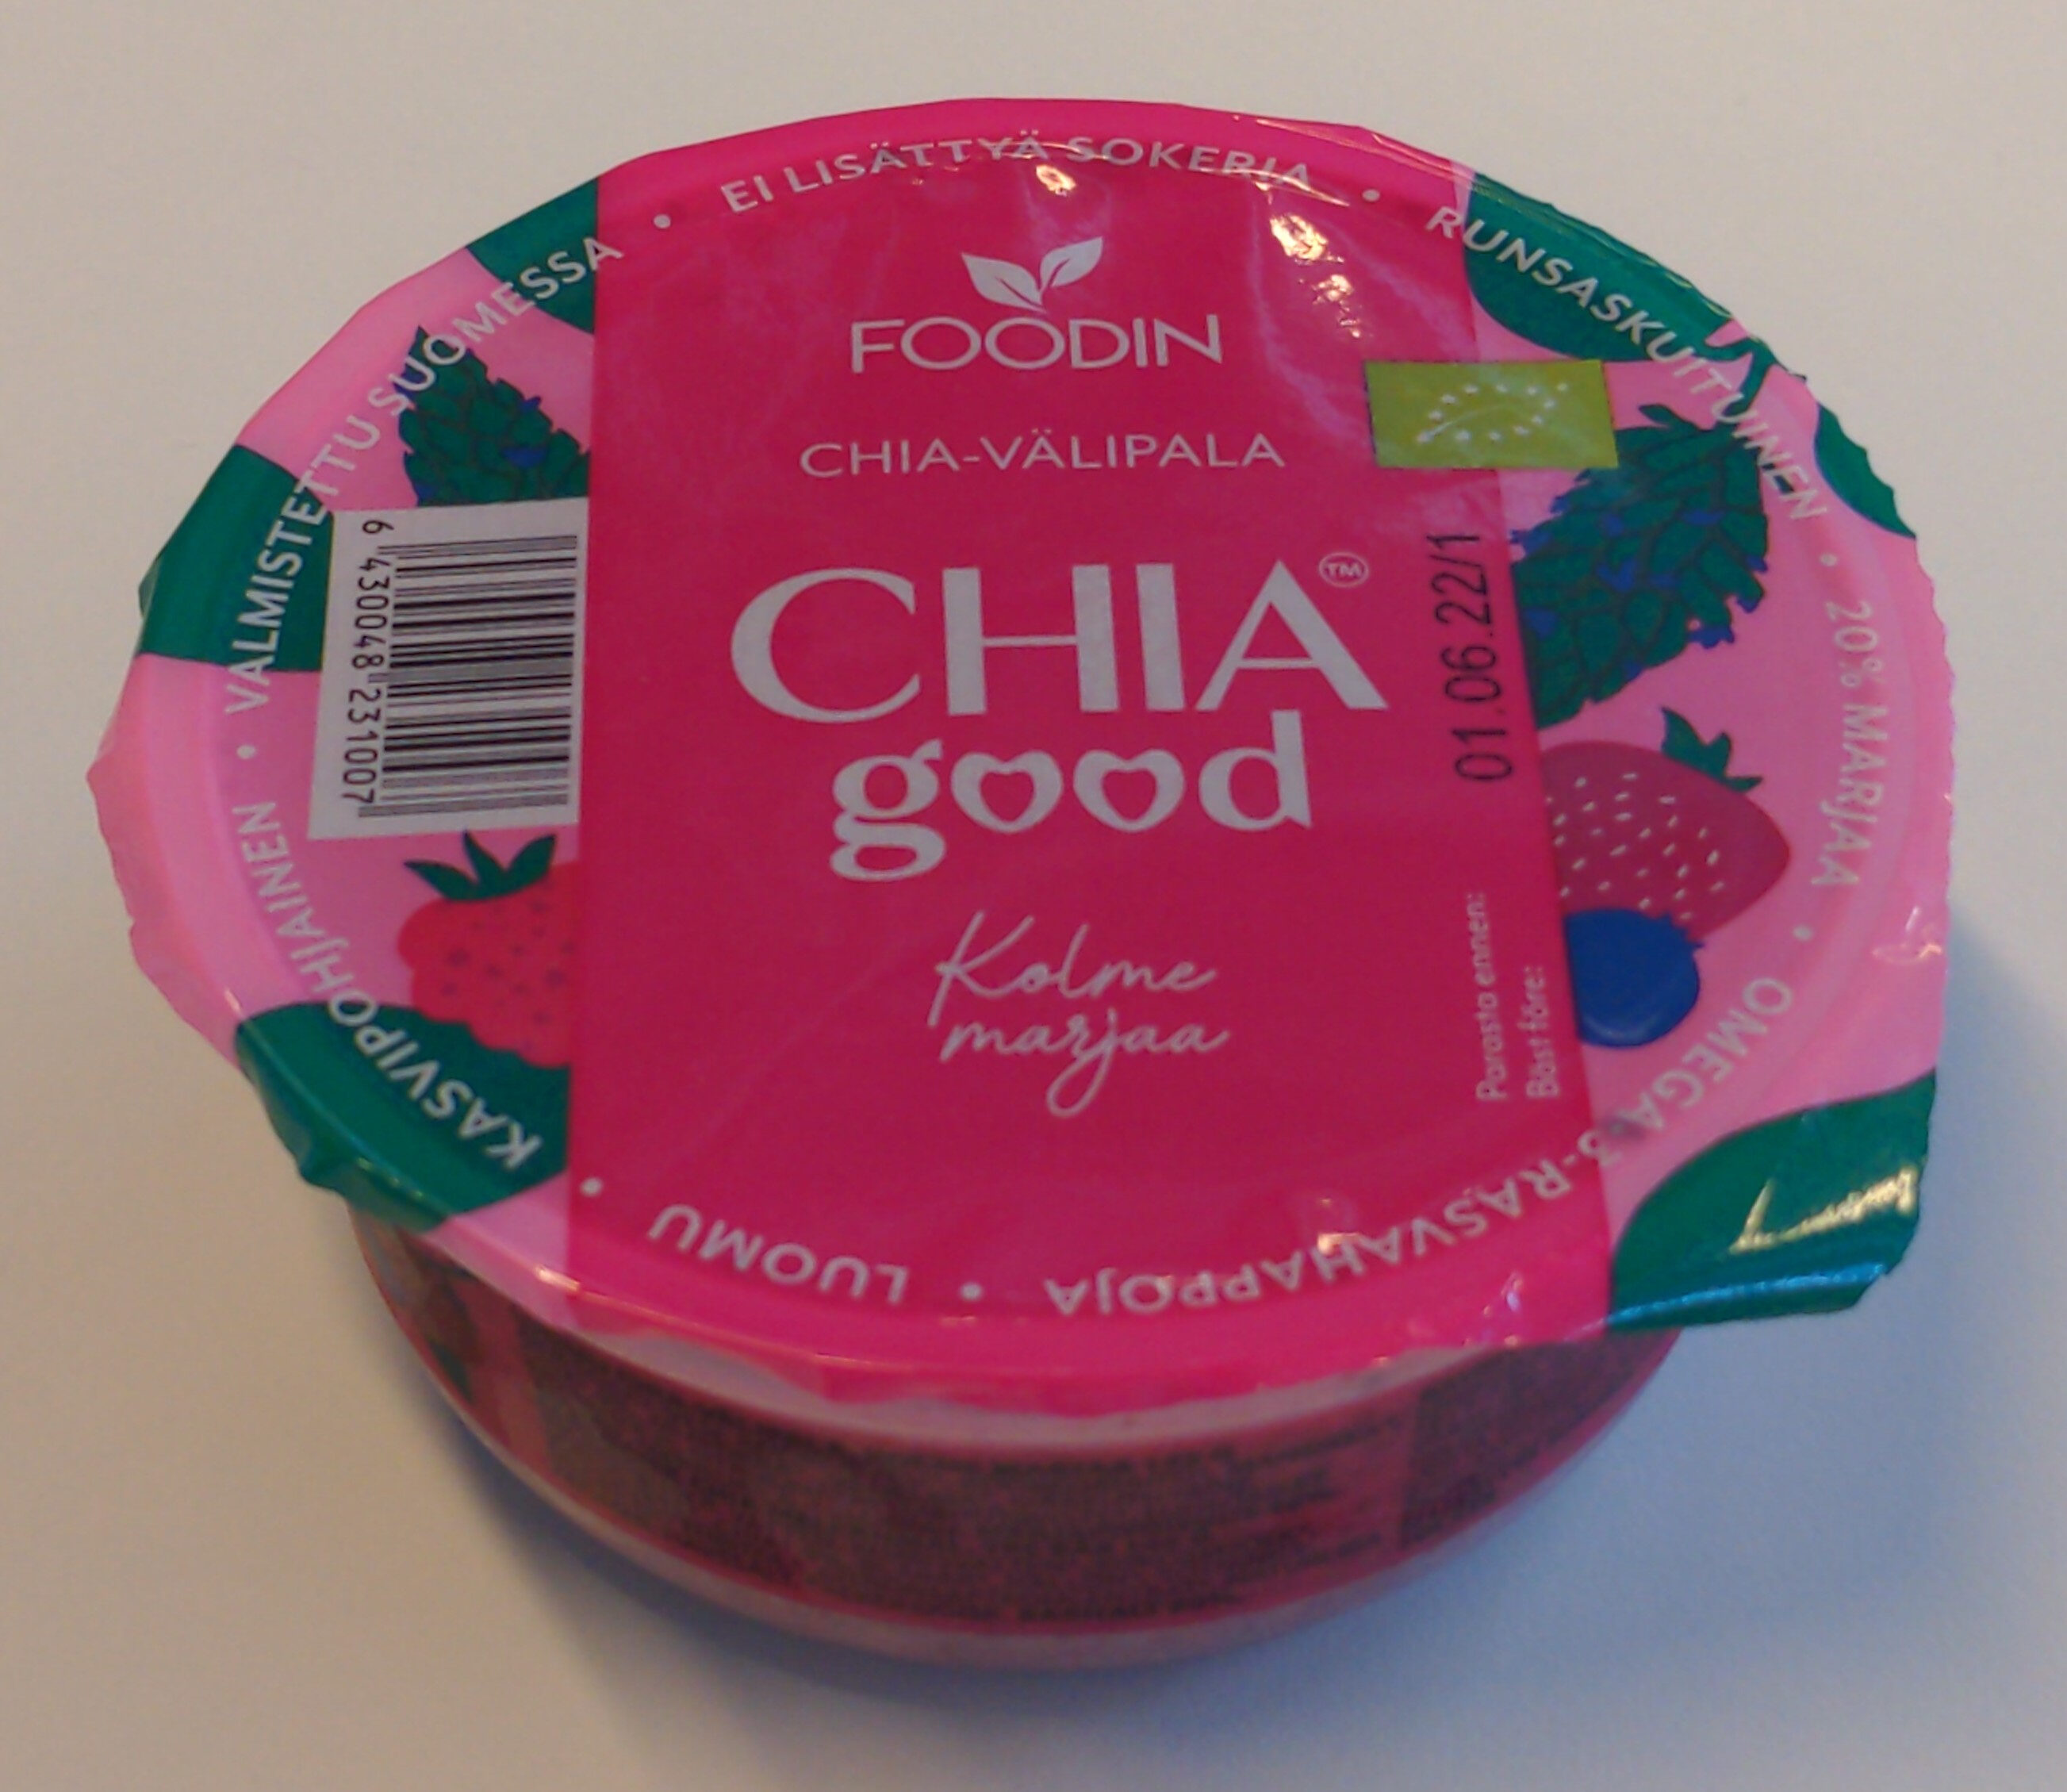 Chia good kolme marjaa - Produkt - fi